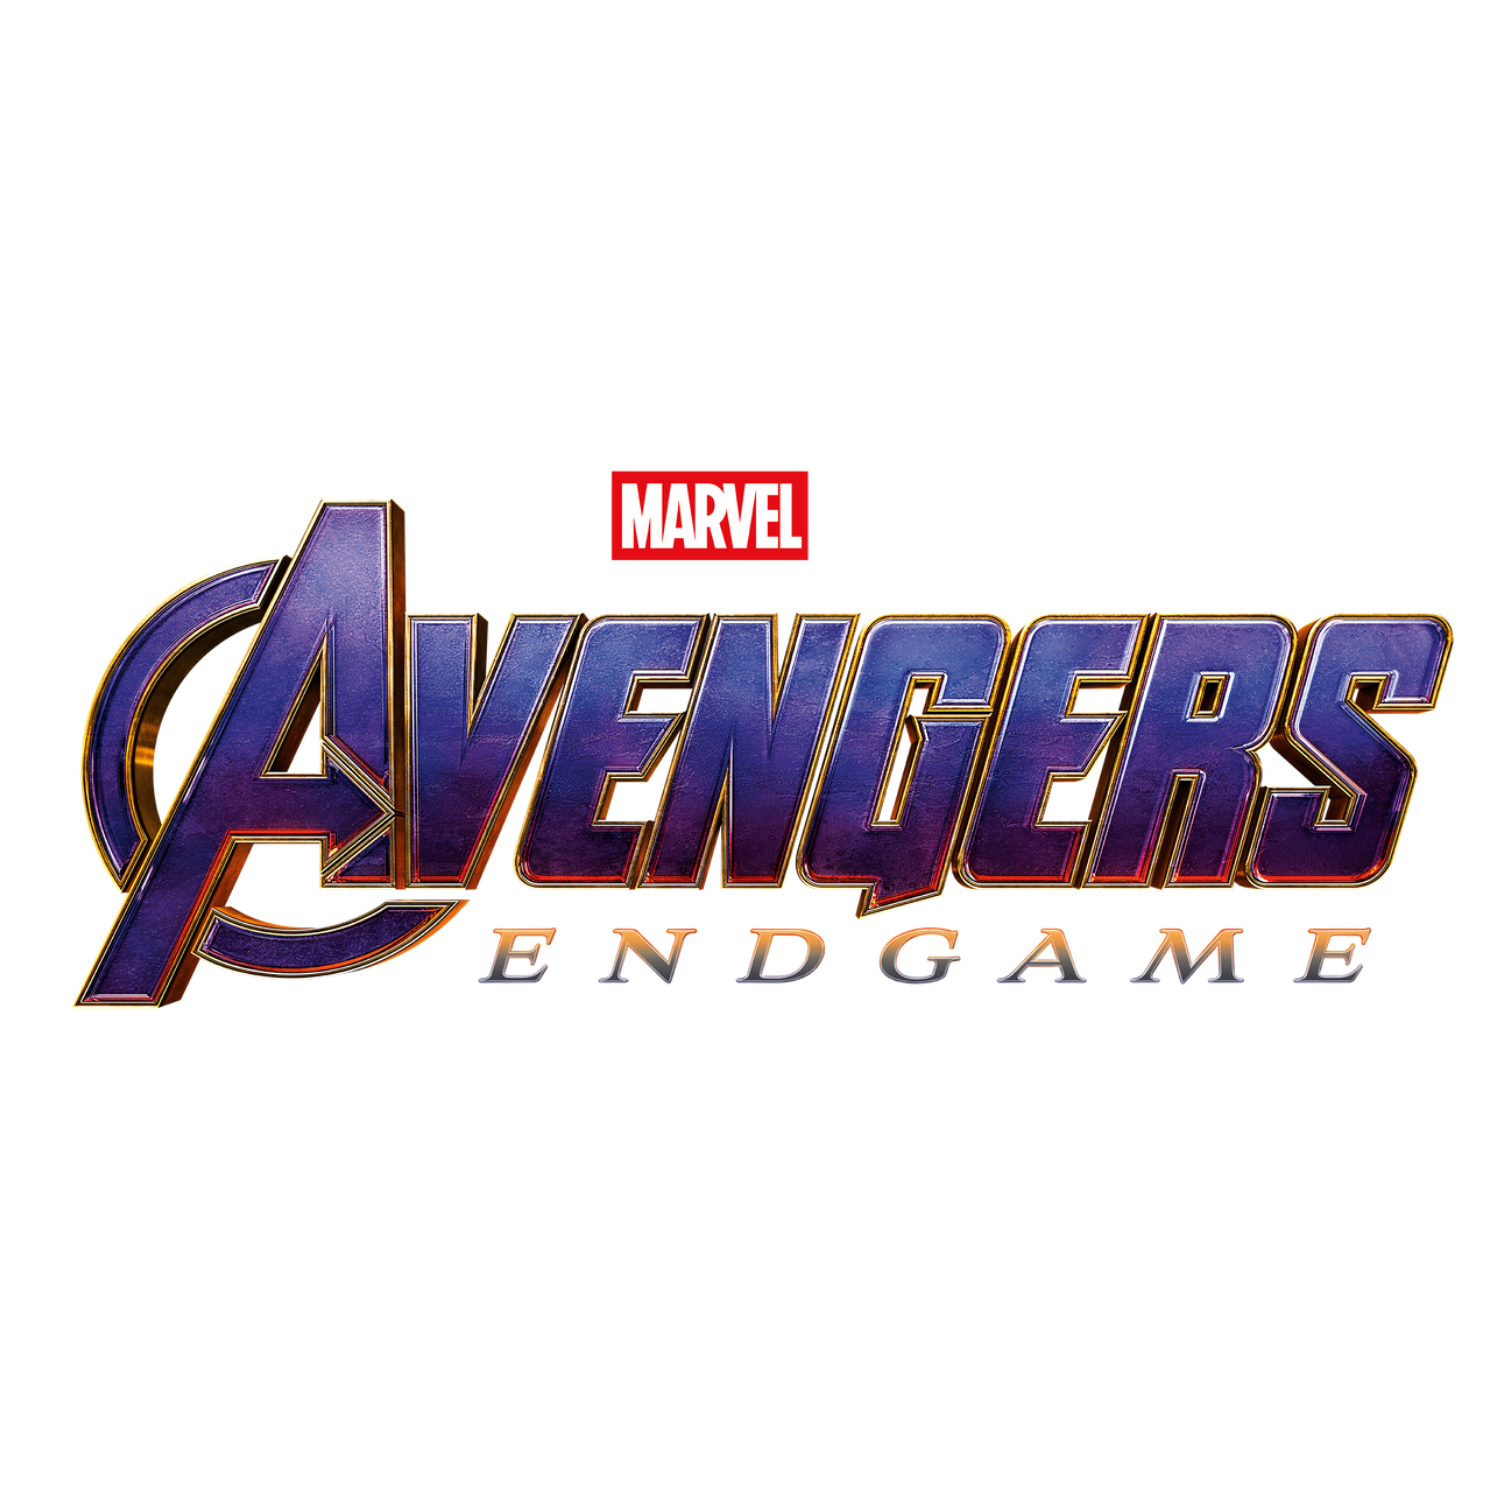 Shop Avengers Endgame products